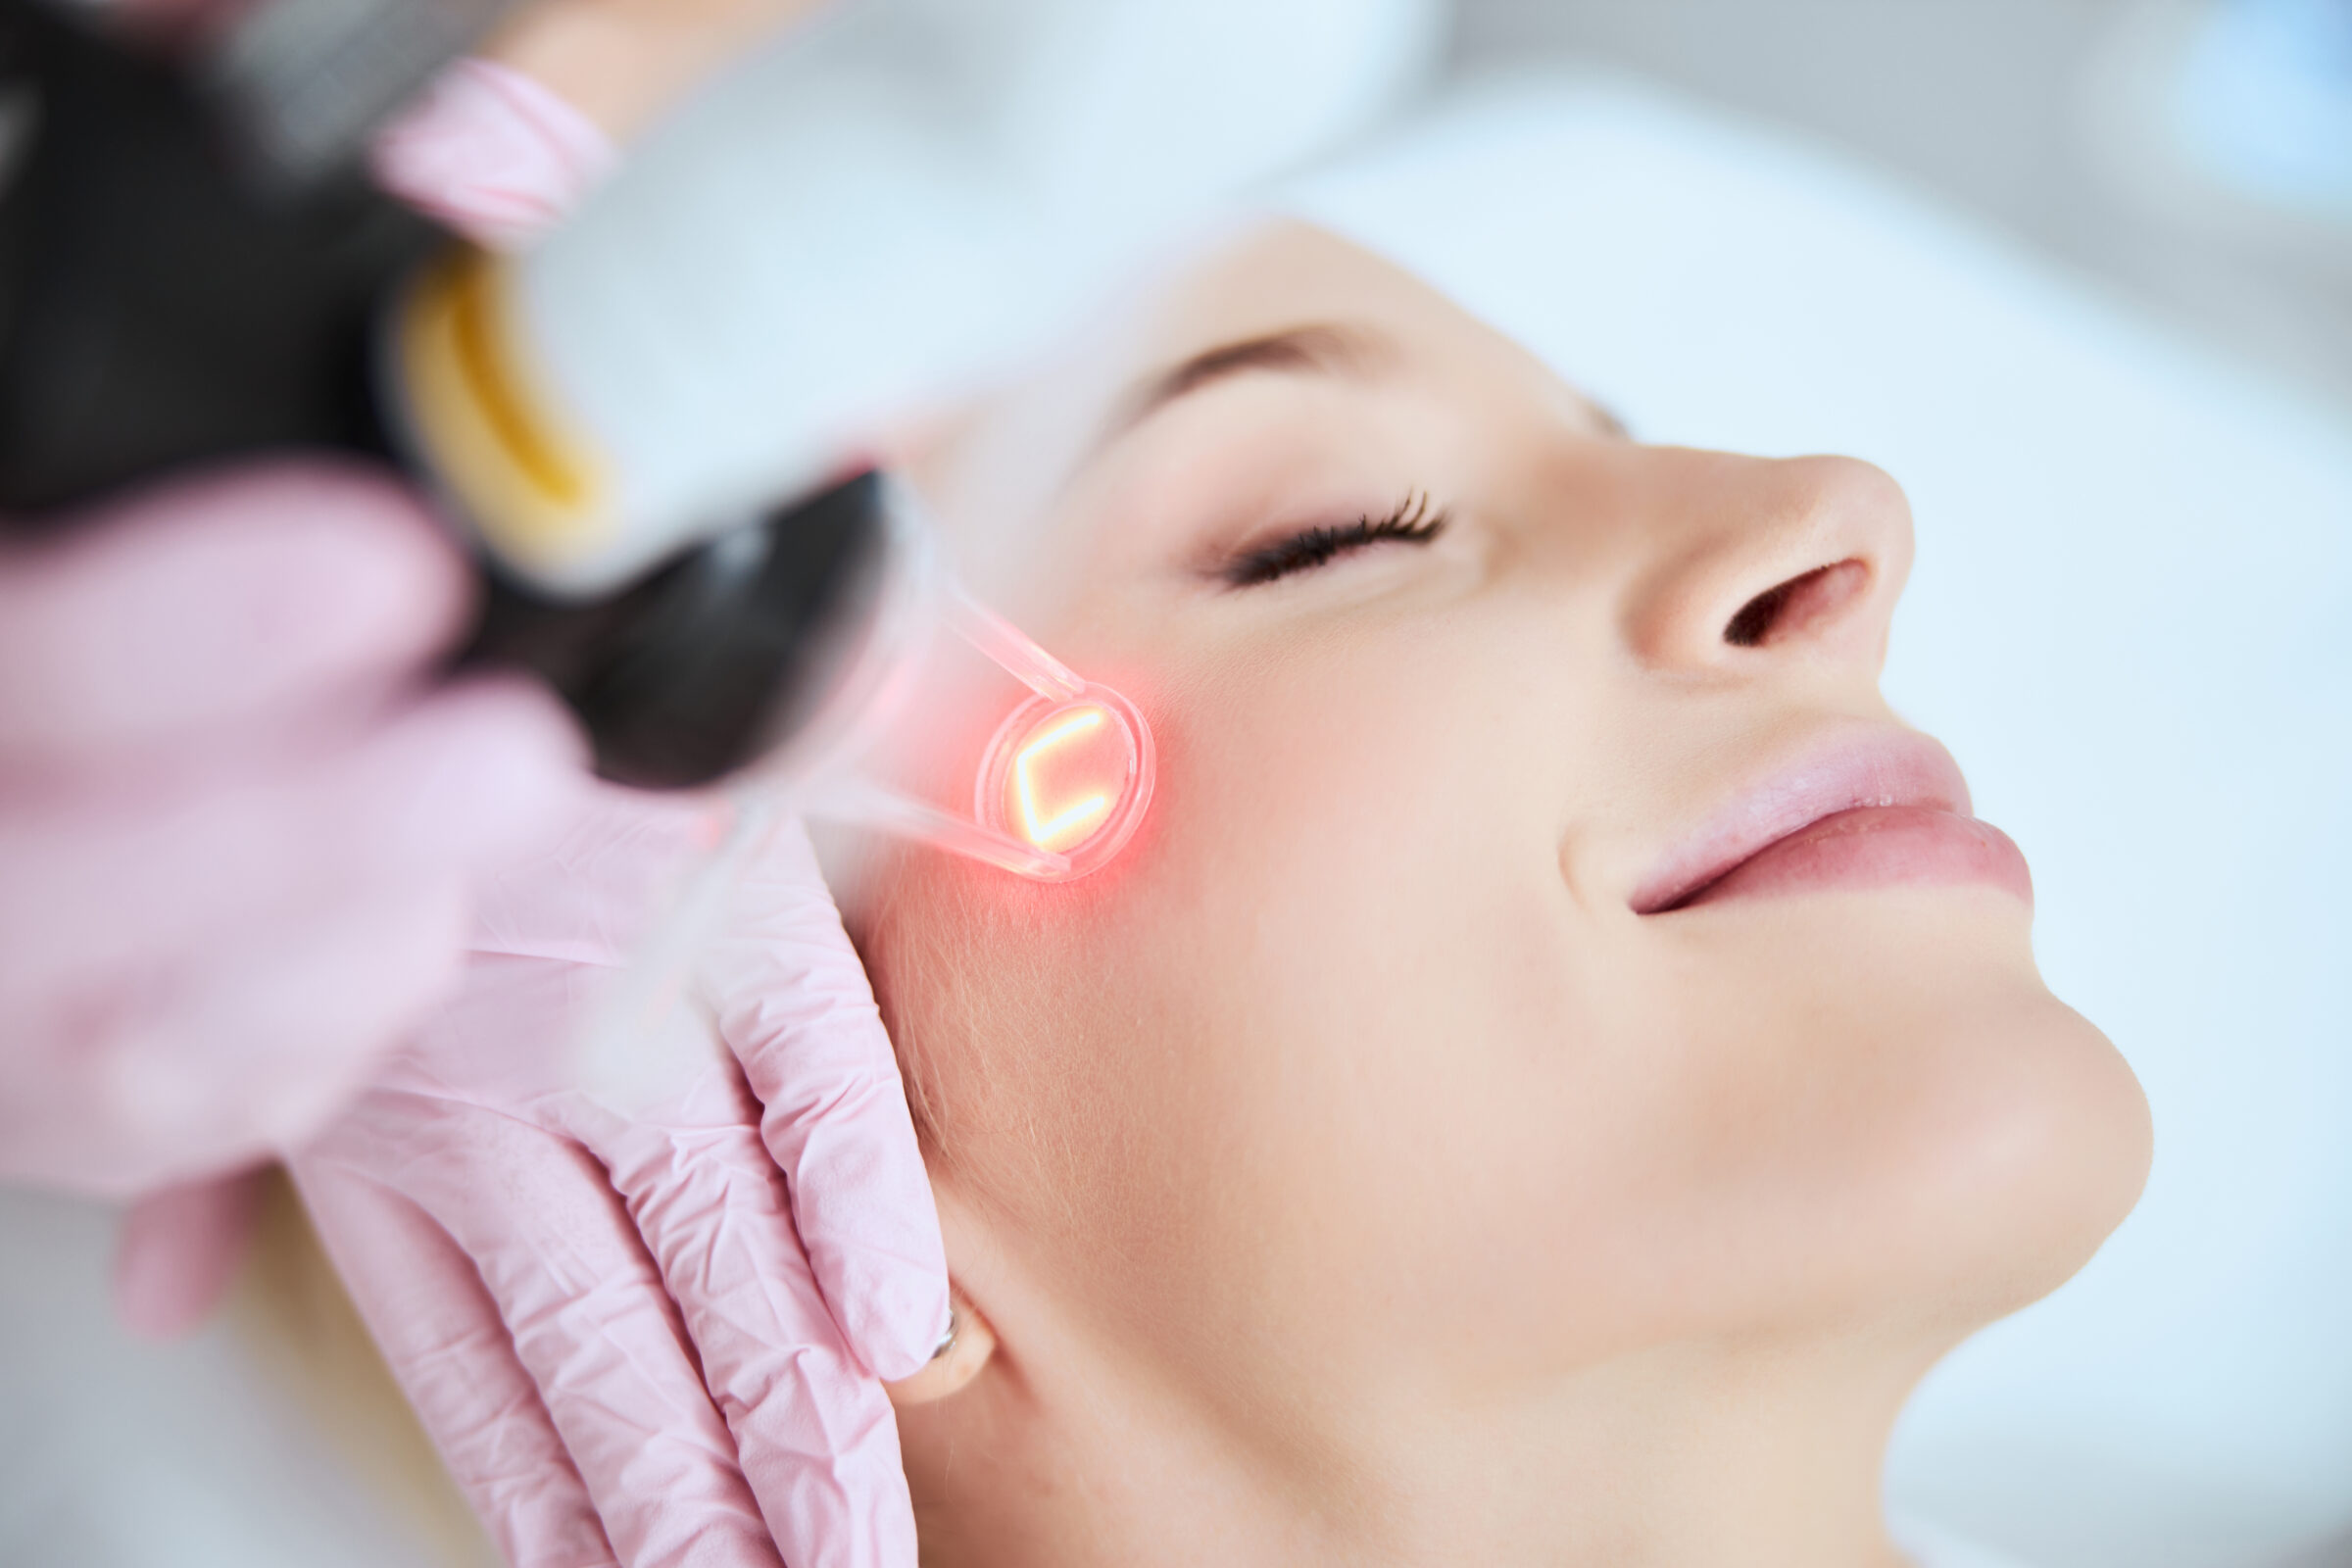 A woman getting laser skin resurfacing treatment